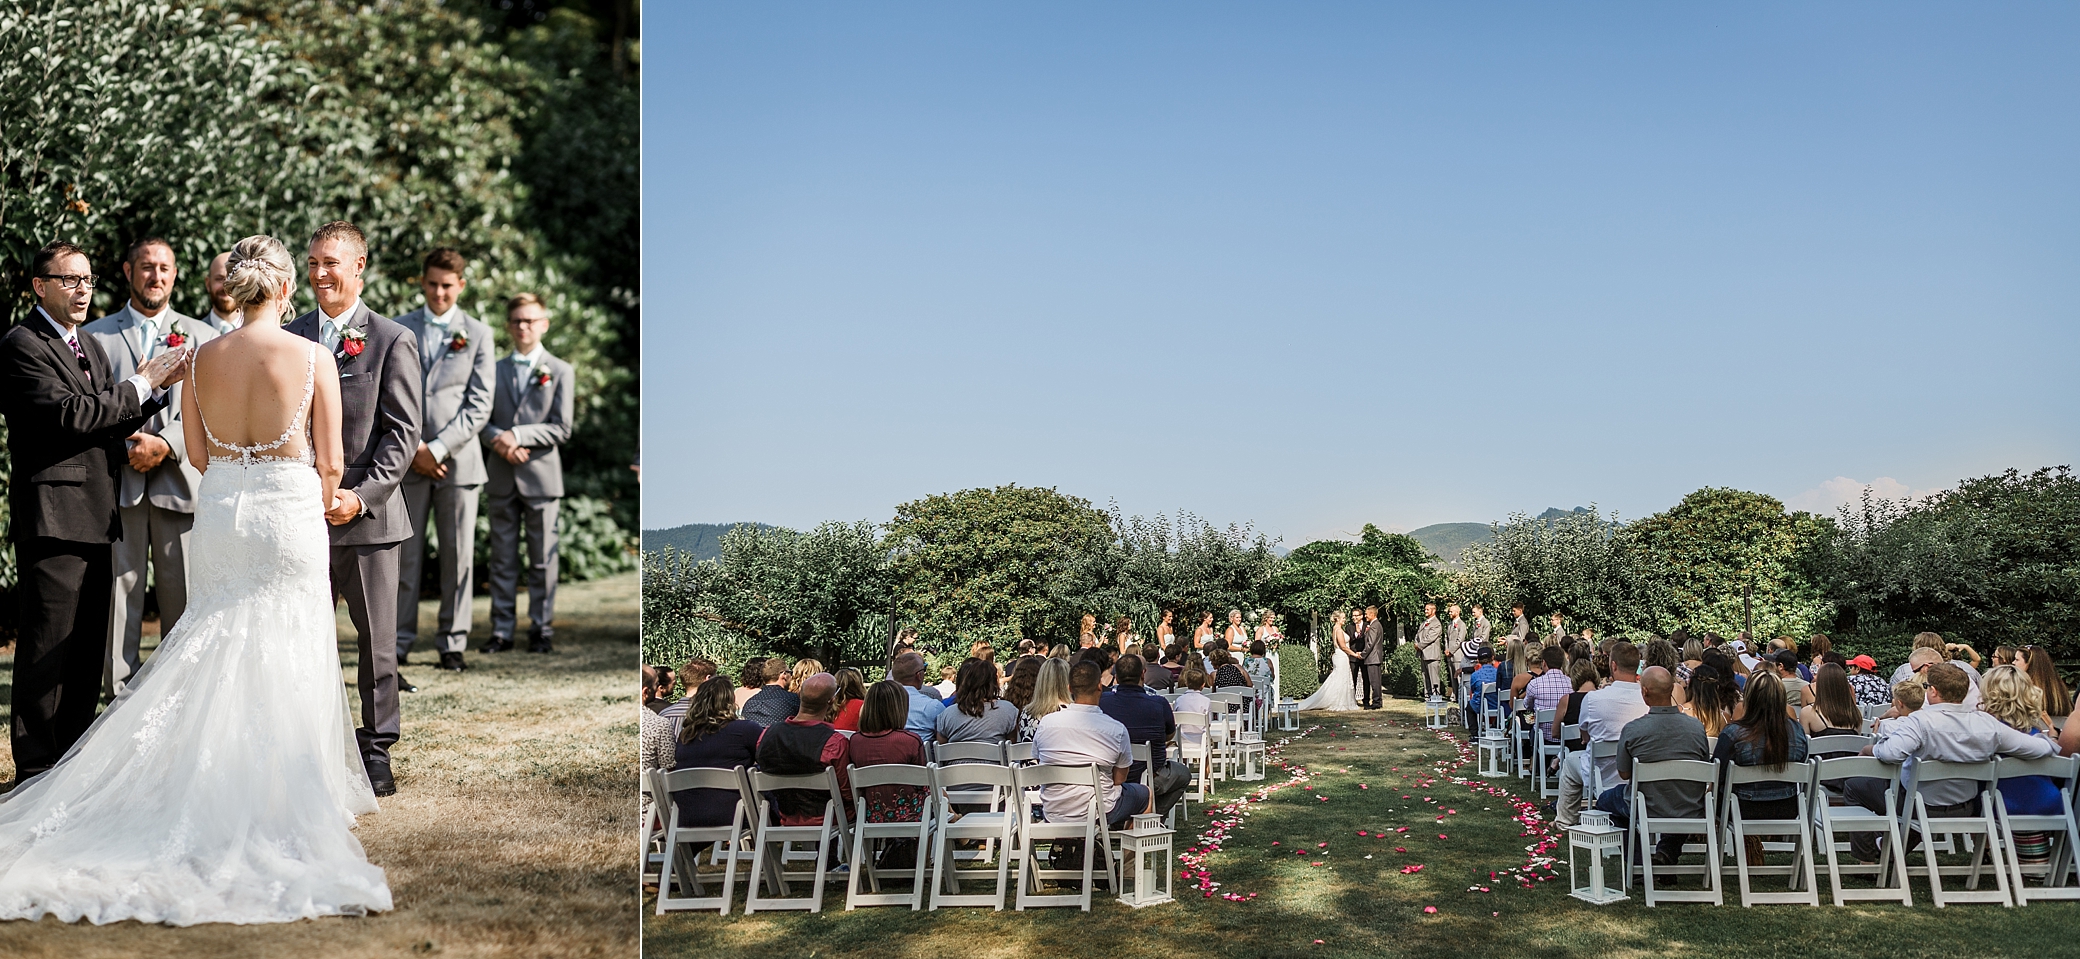 Maplehurst Farm Wedding | Mount Vernon, WA | Photographed by Washington Wedding Photographer, Megan Montalvo Photography